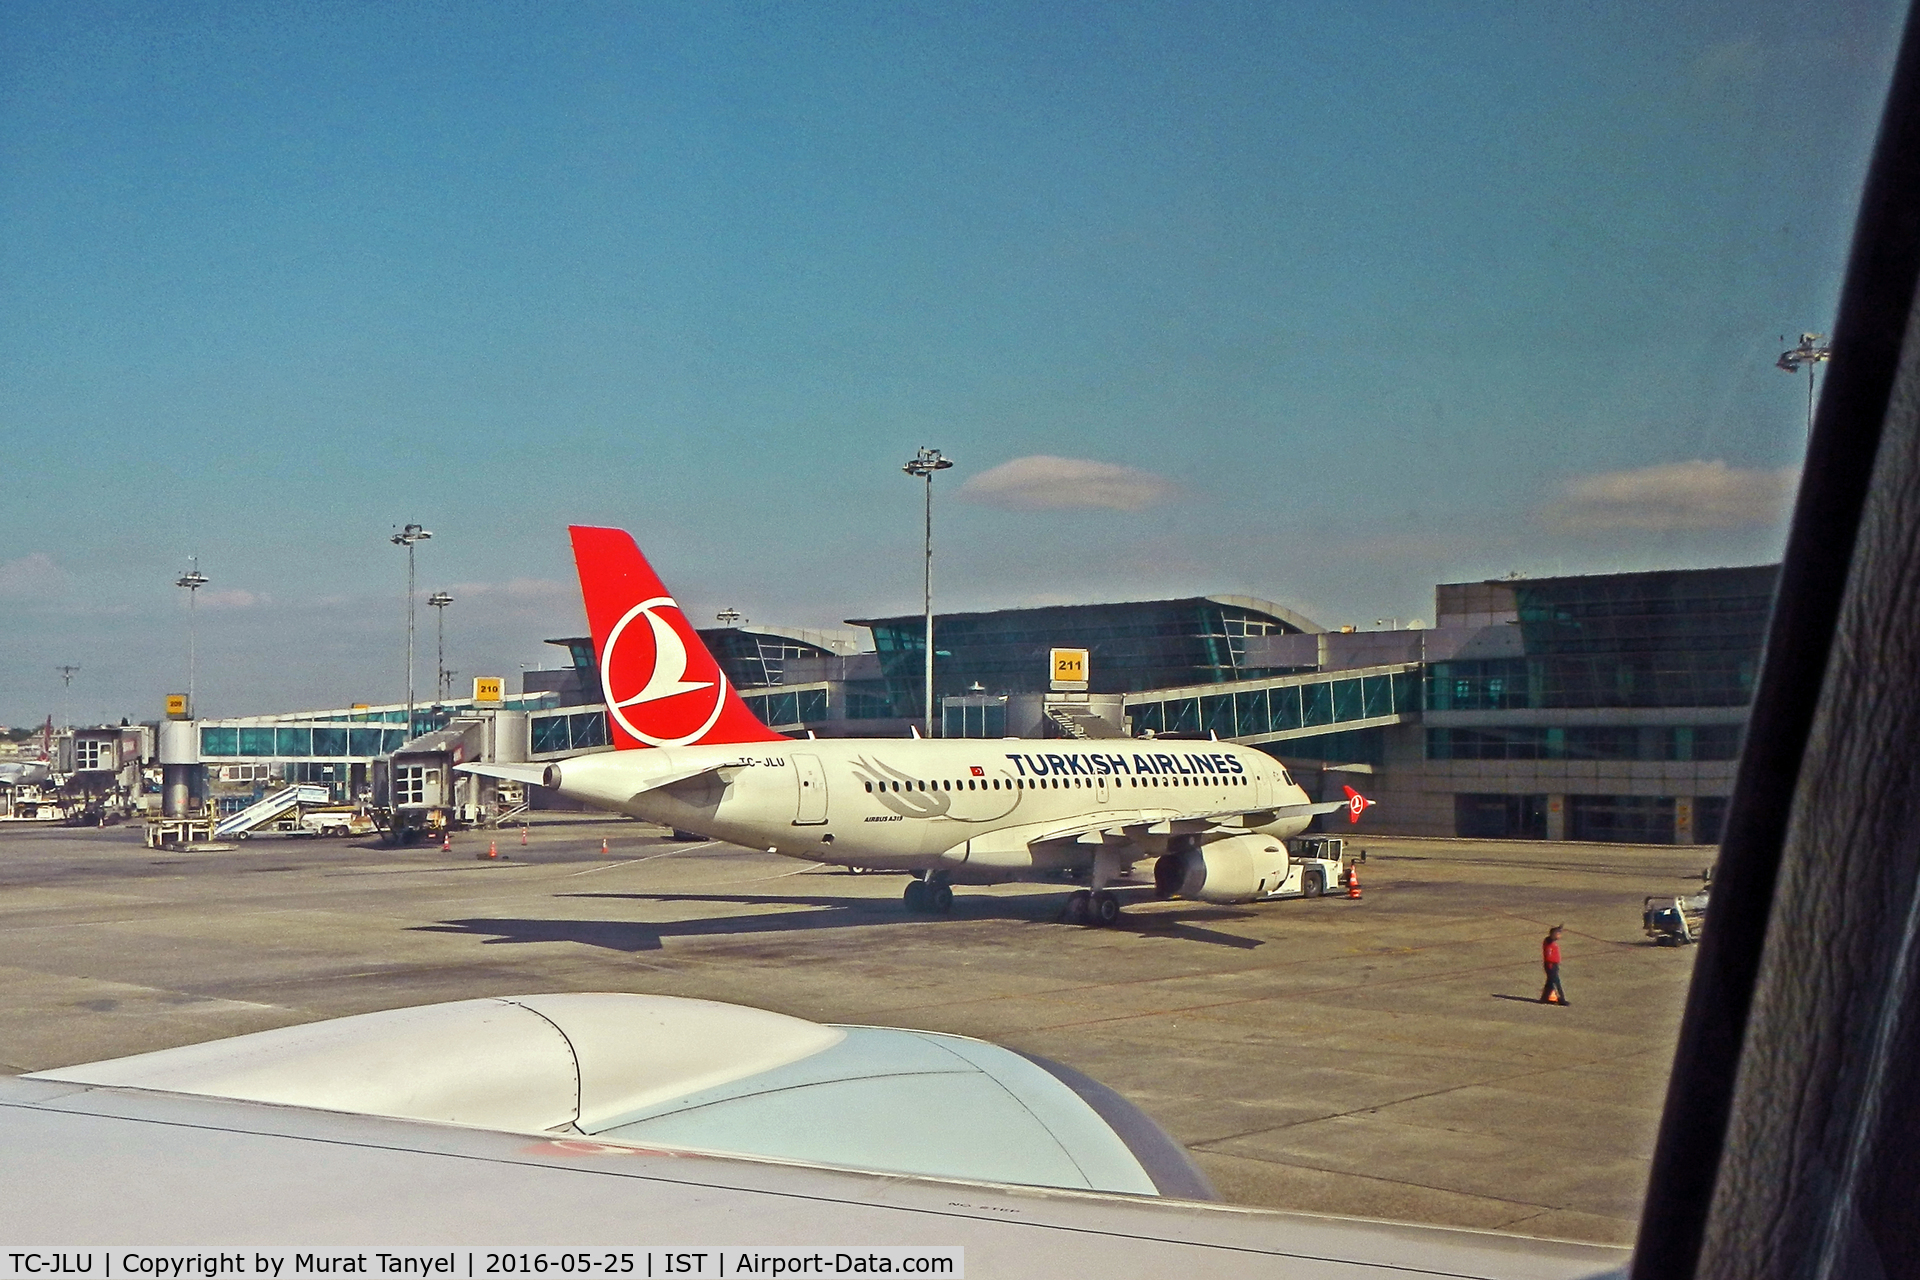 TC-JLU, 2011 Airbus A319-132 C/N 4695, Pushing off from gate at Atatürk International